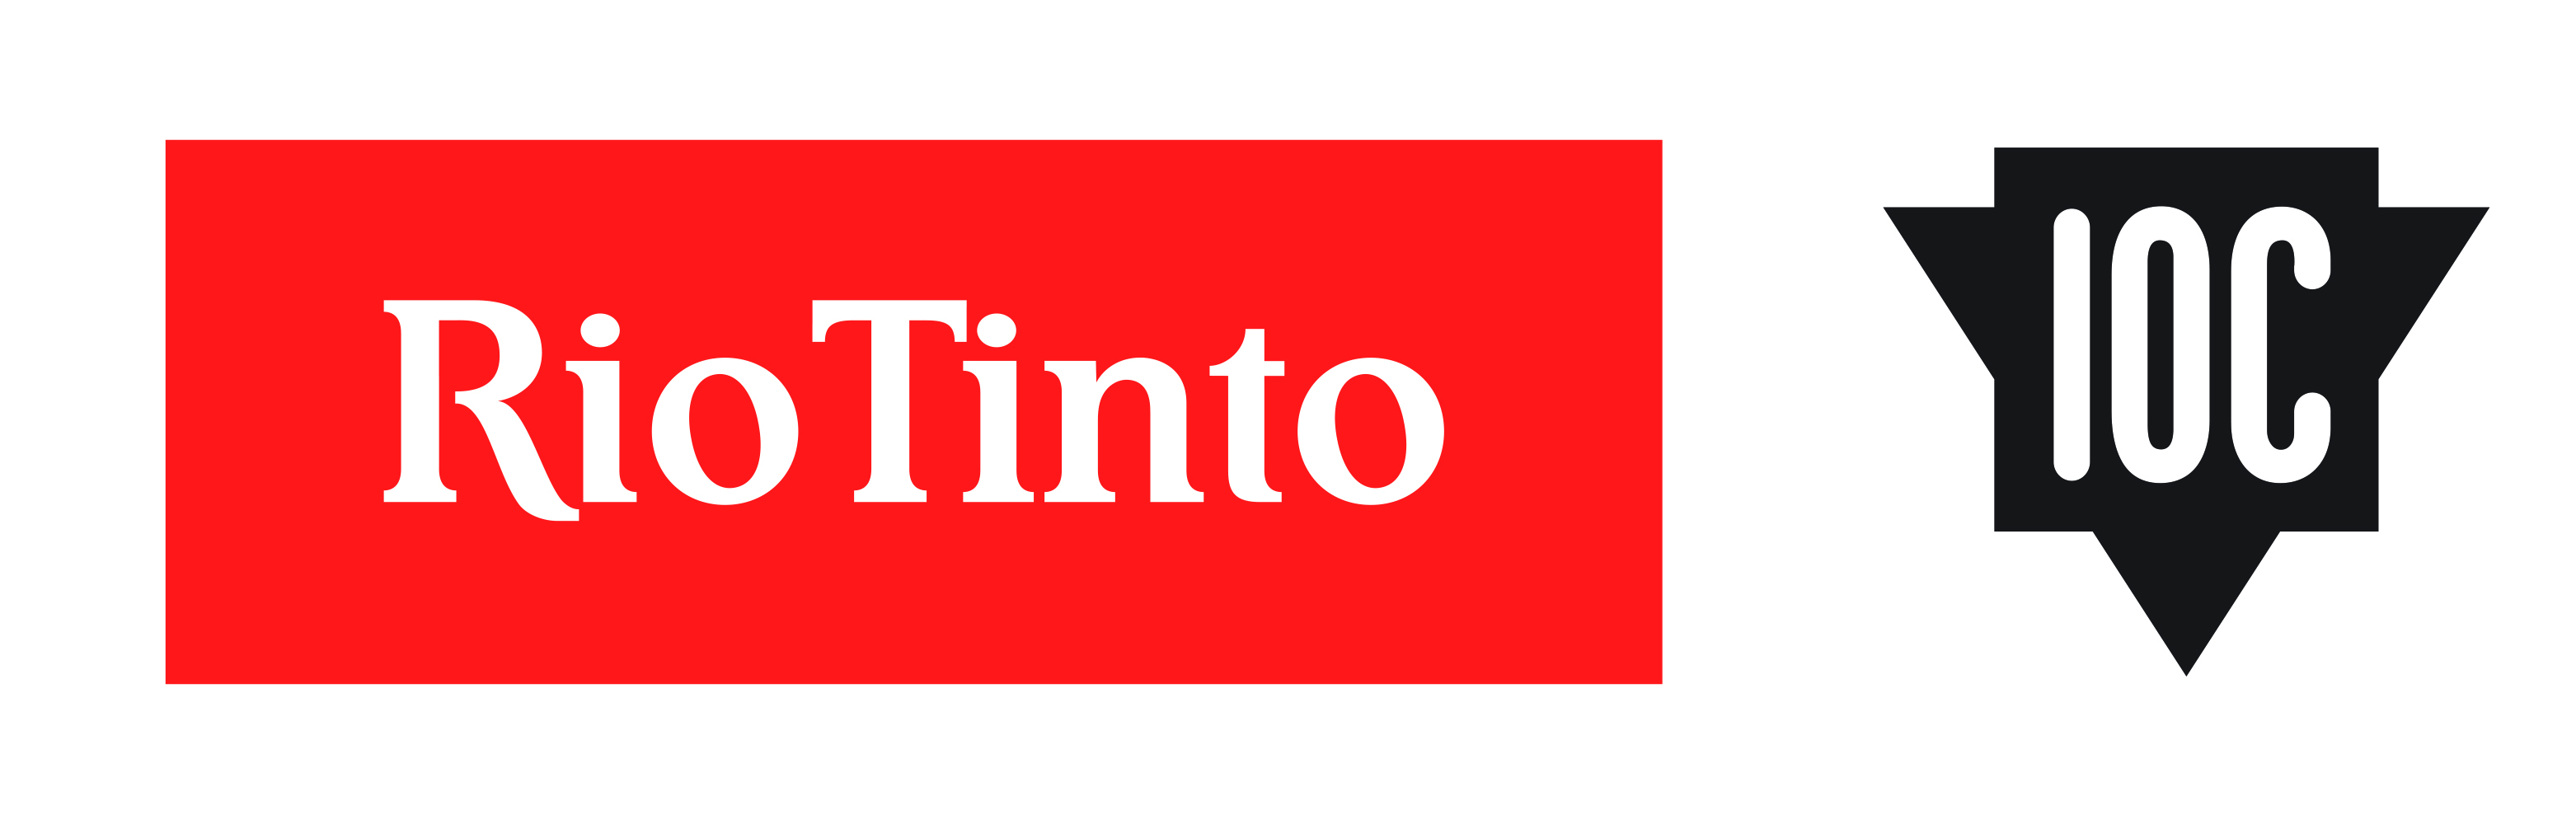 Rio Tinto IOC